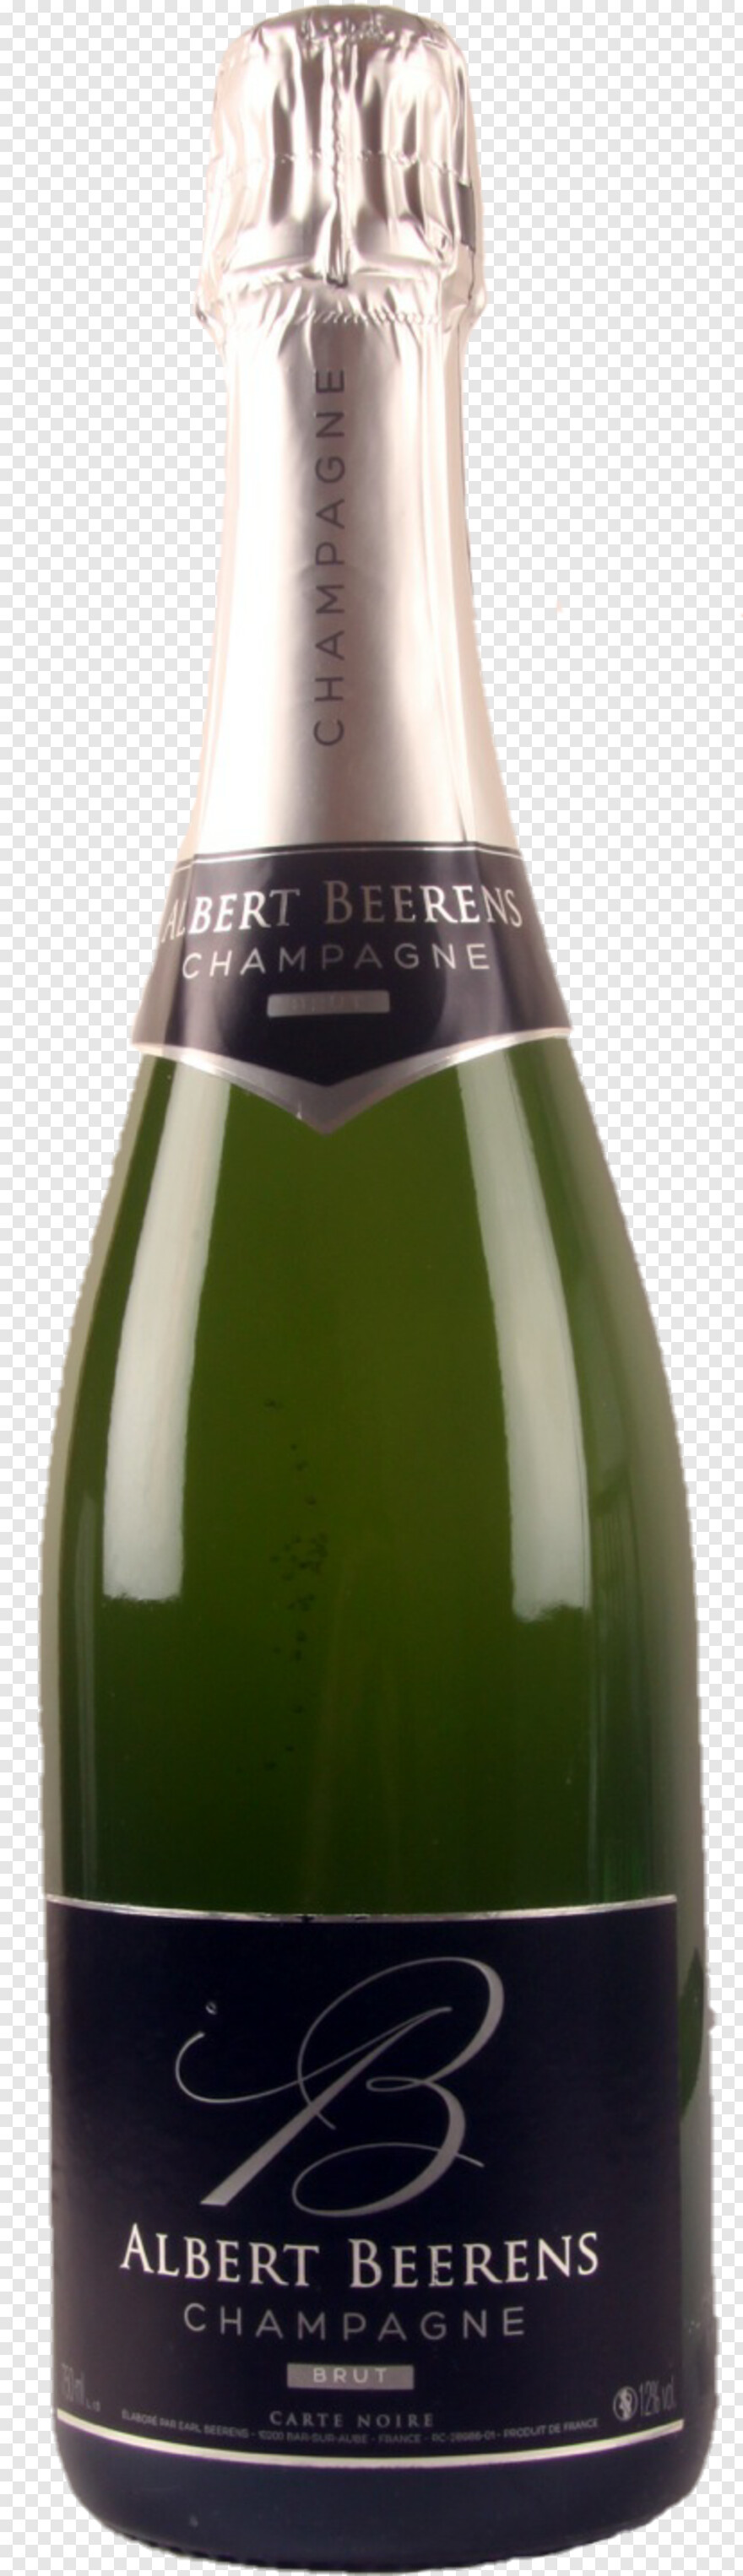 champagne-glasses # 326460